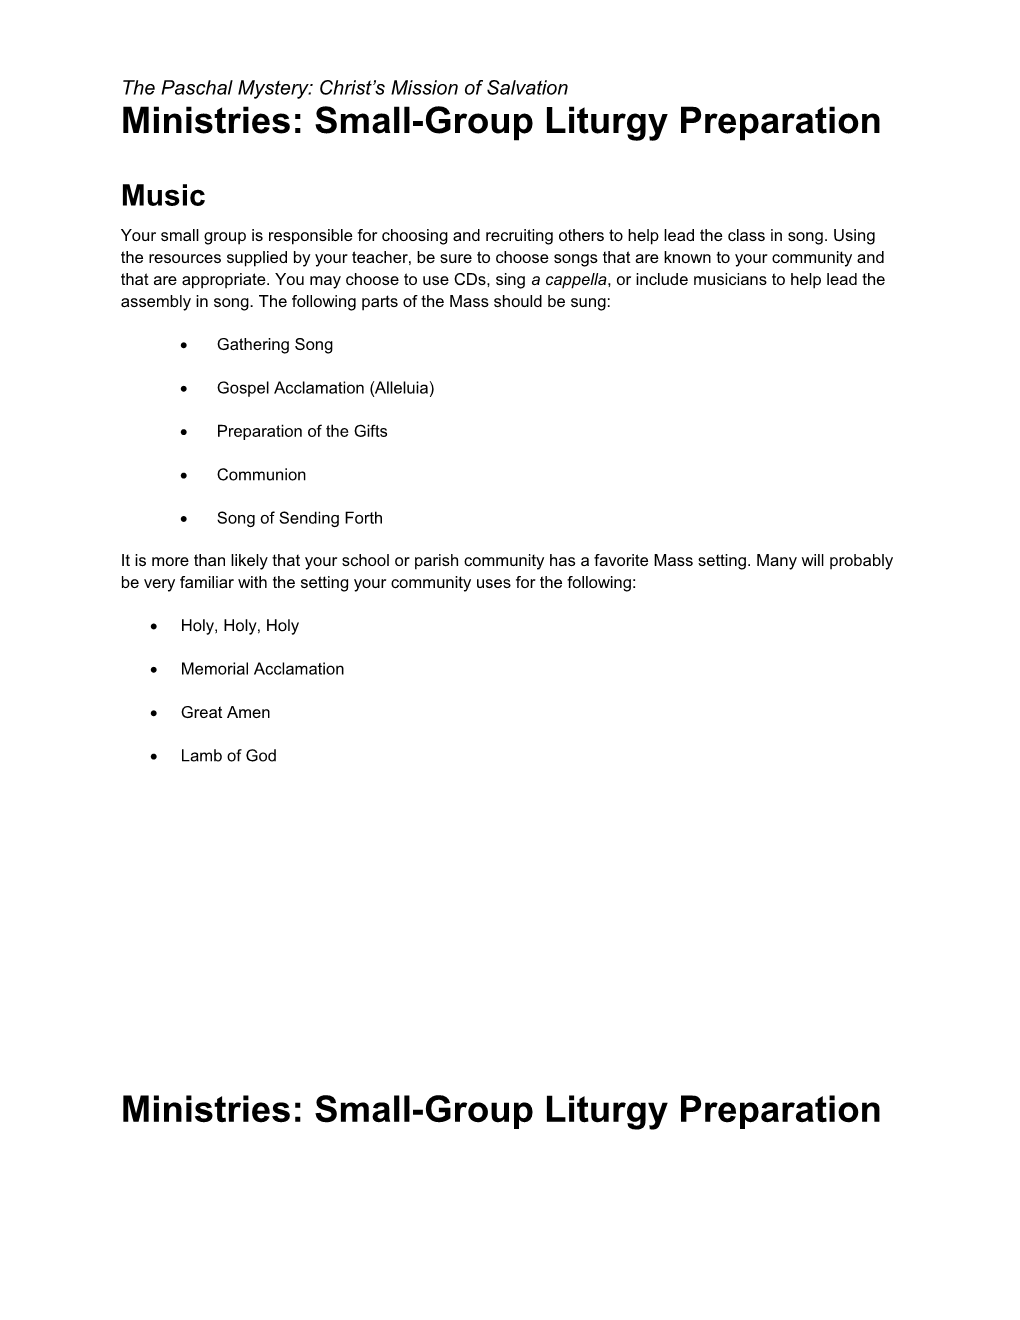 Ministries: Small-Group Liturgy Preparation